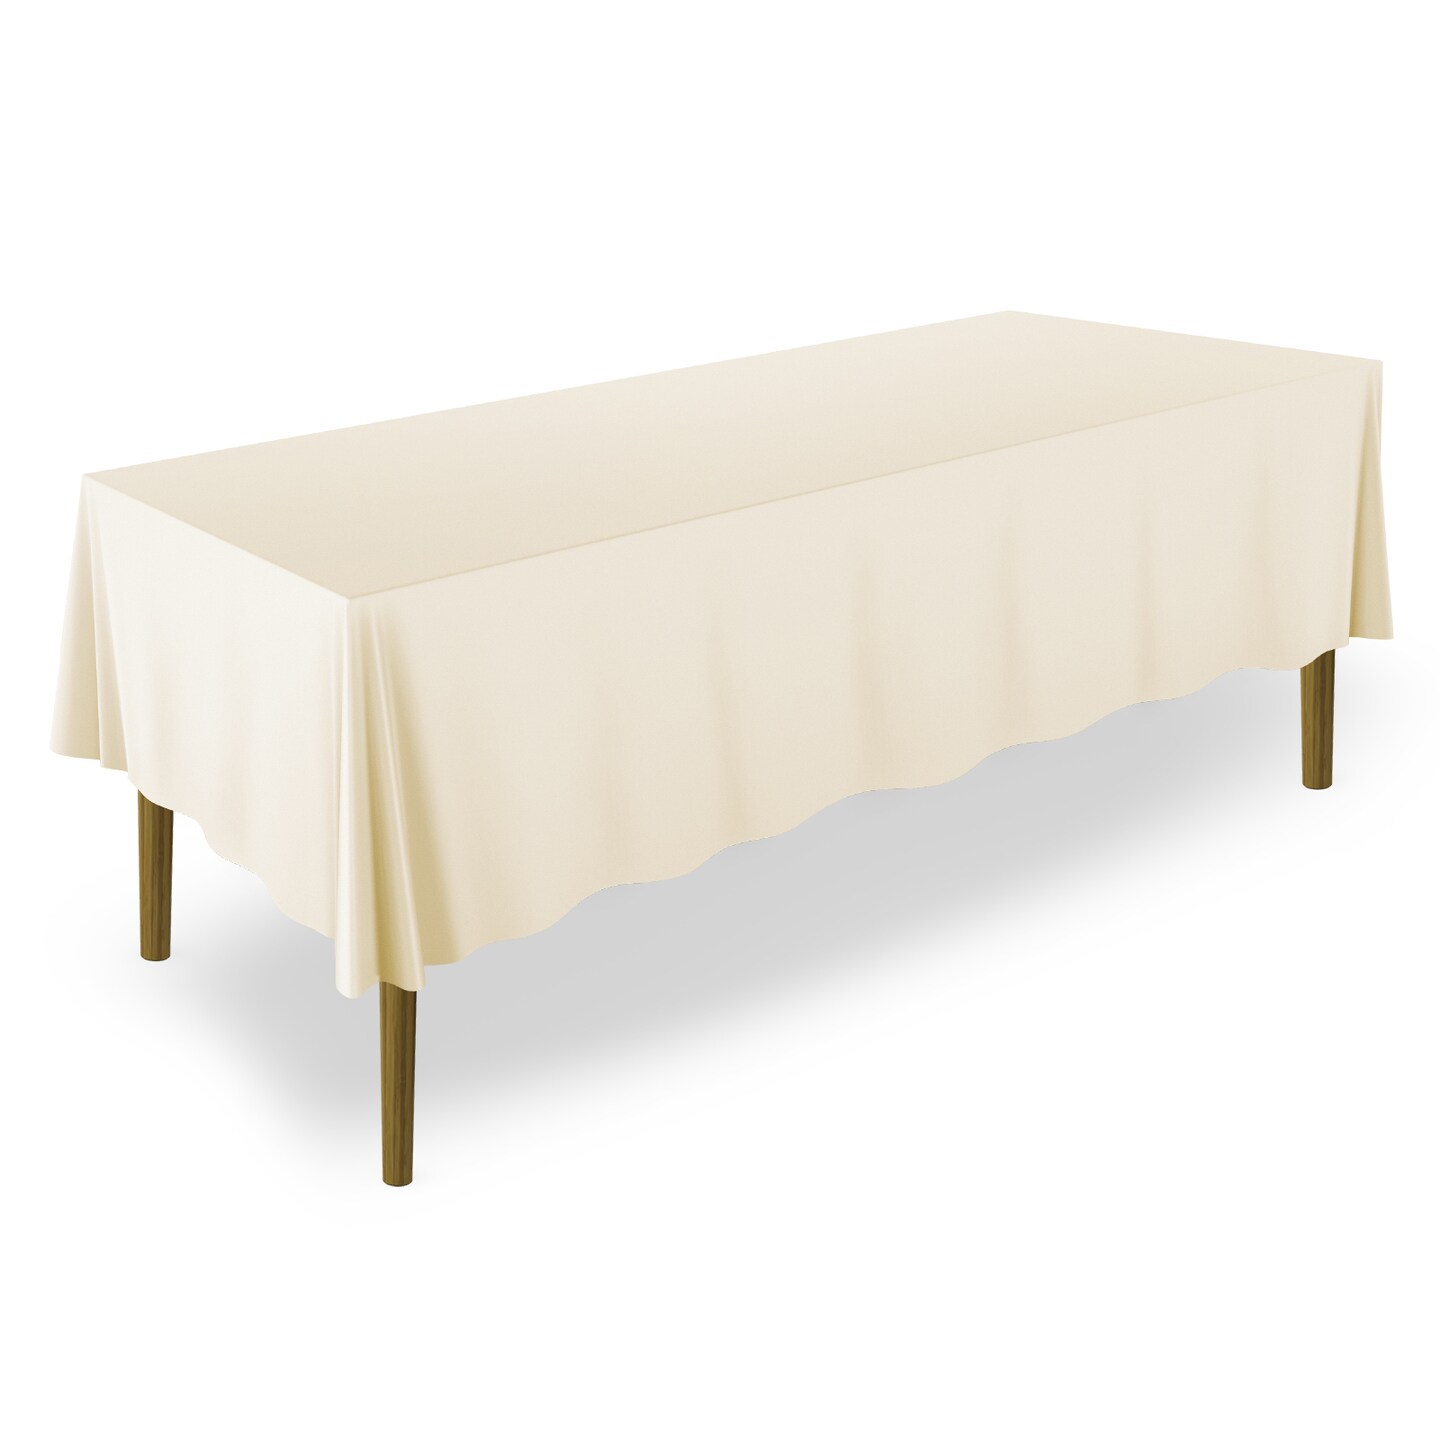 Lann's Linens - Premium Tablecloth for Wedding / Banquet / Restaurant - Rectangular Polyester Fabric Table Cloth